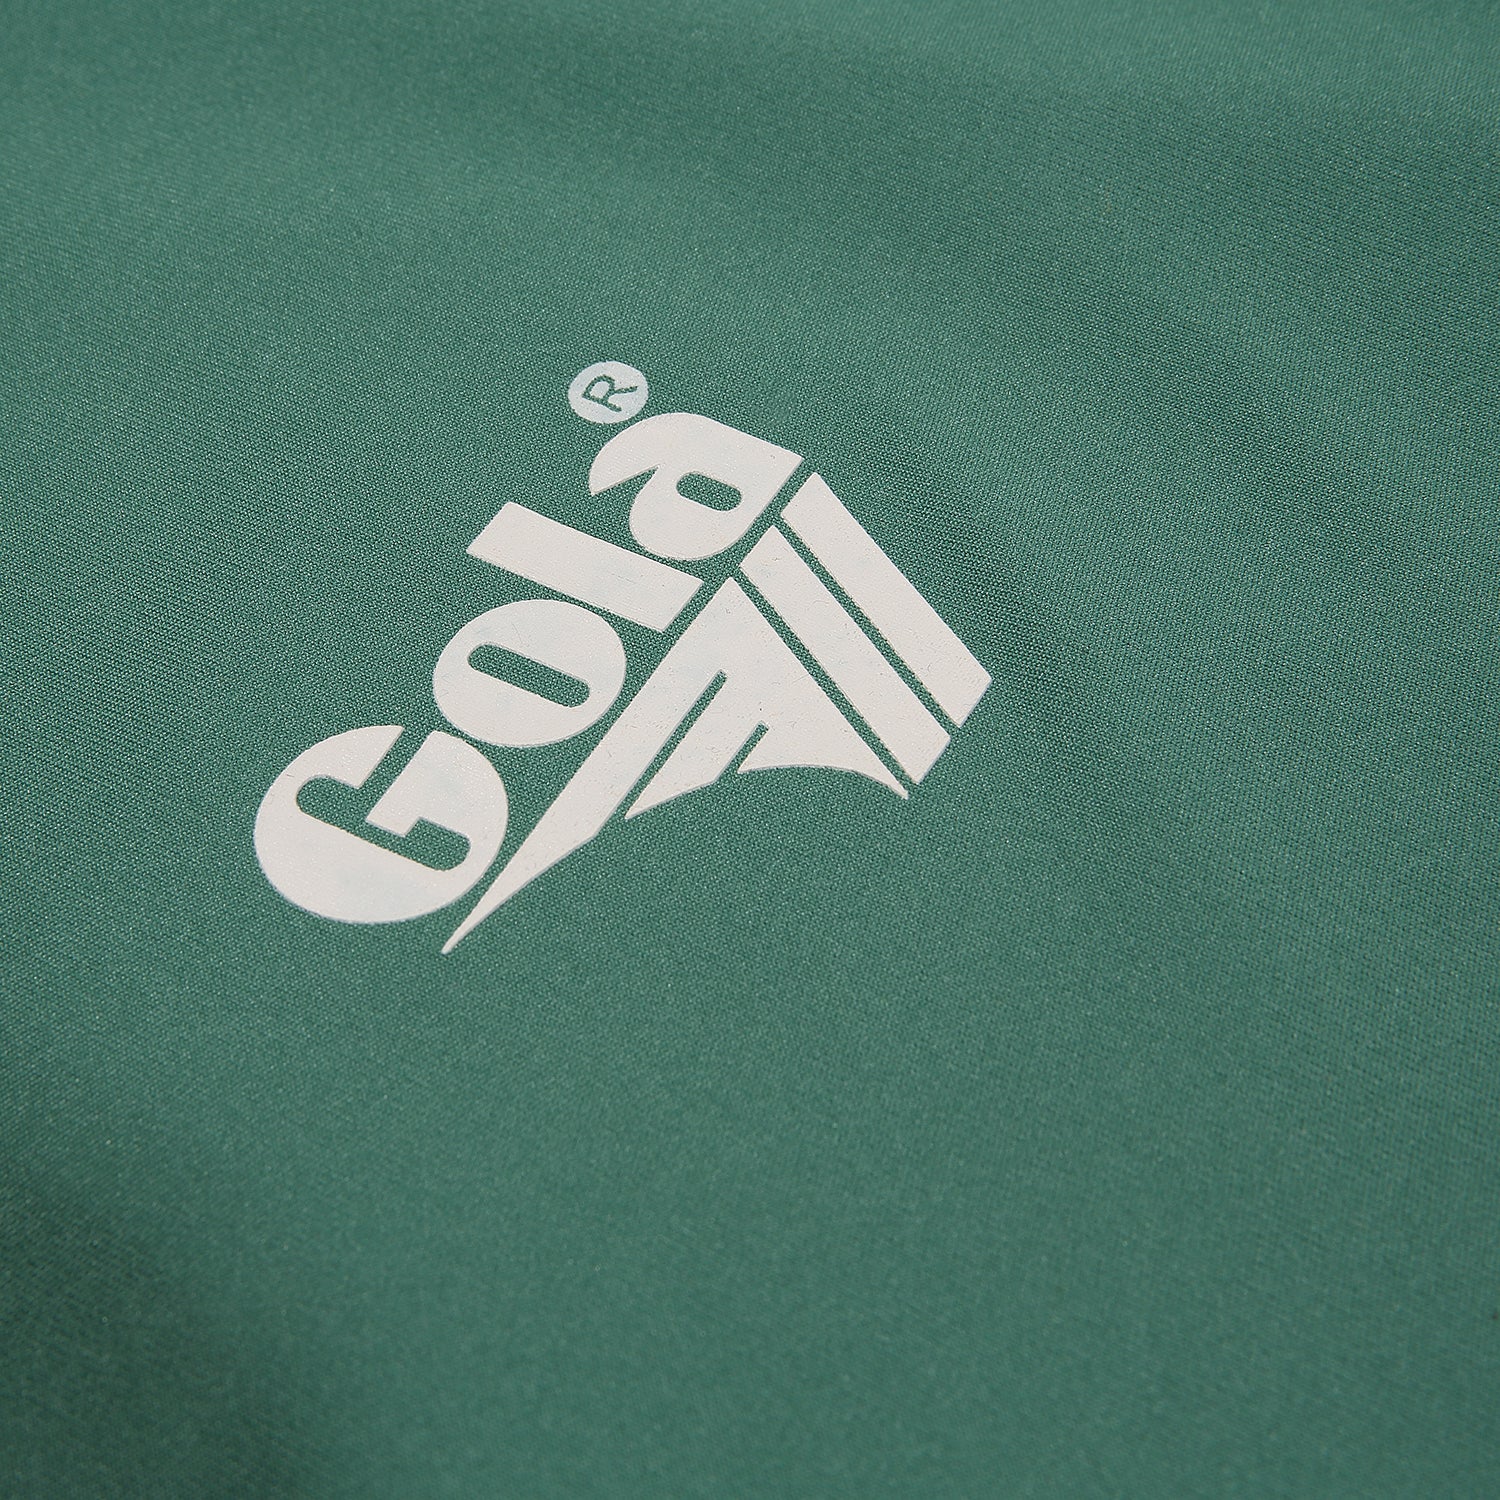 Gola Classic Printed Zip Up Track Top Jacket Green - Raw Menswear